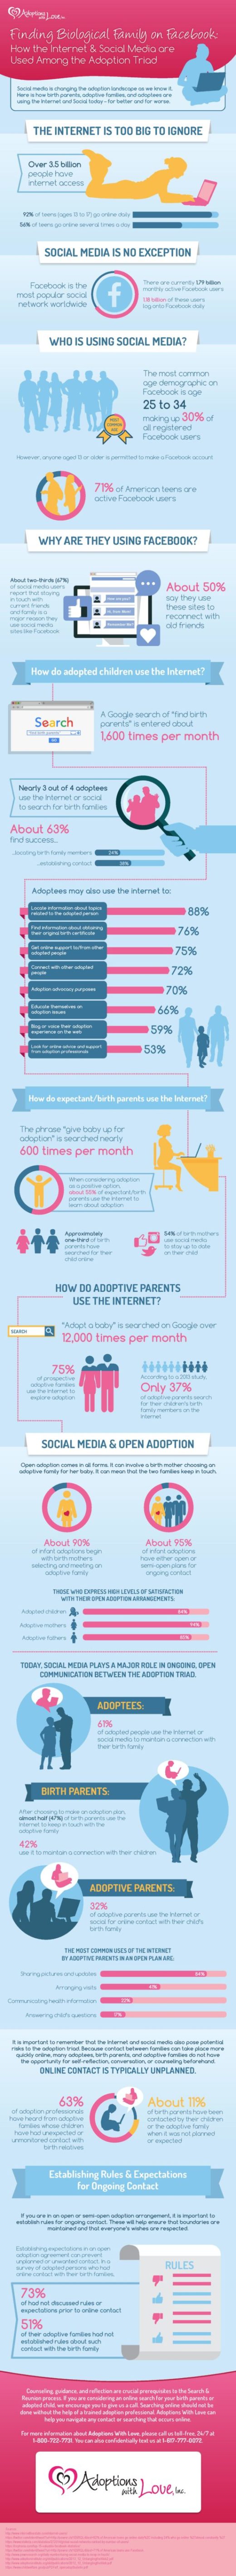 internet and adoption